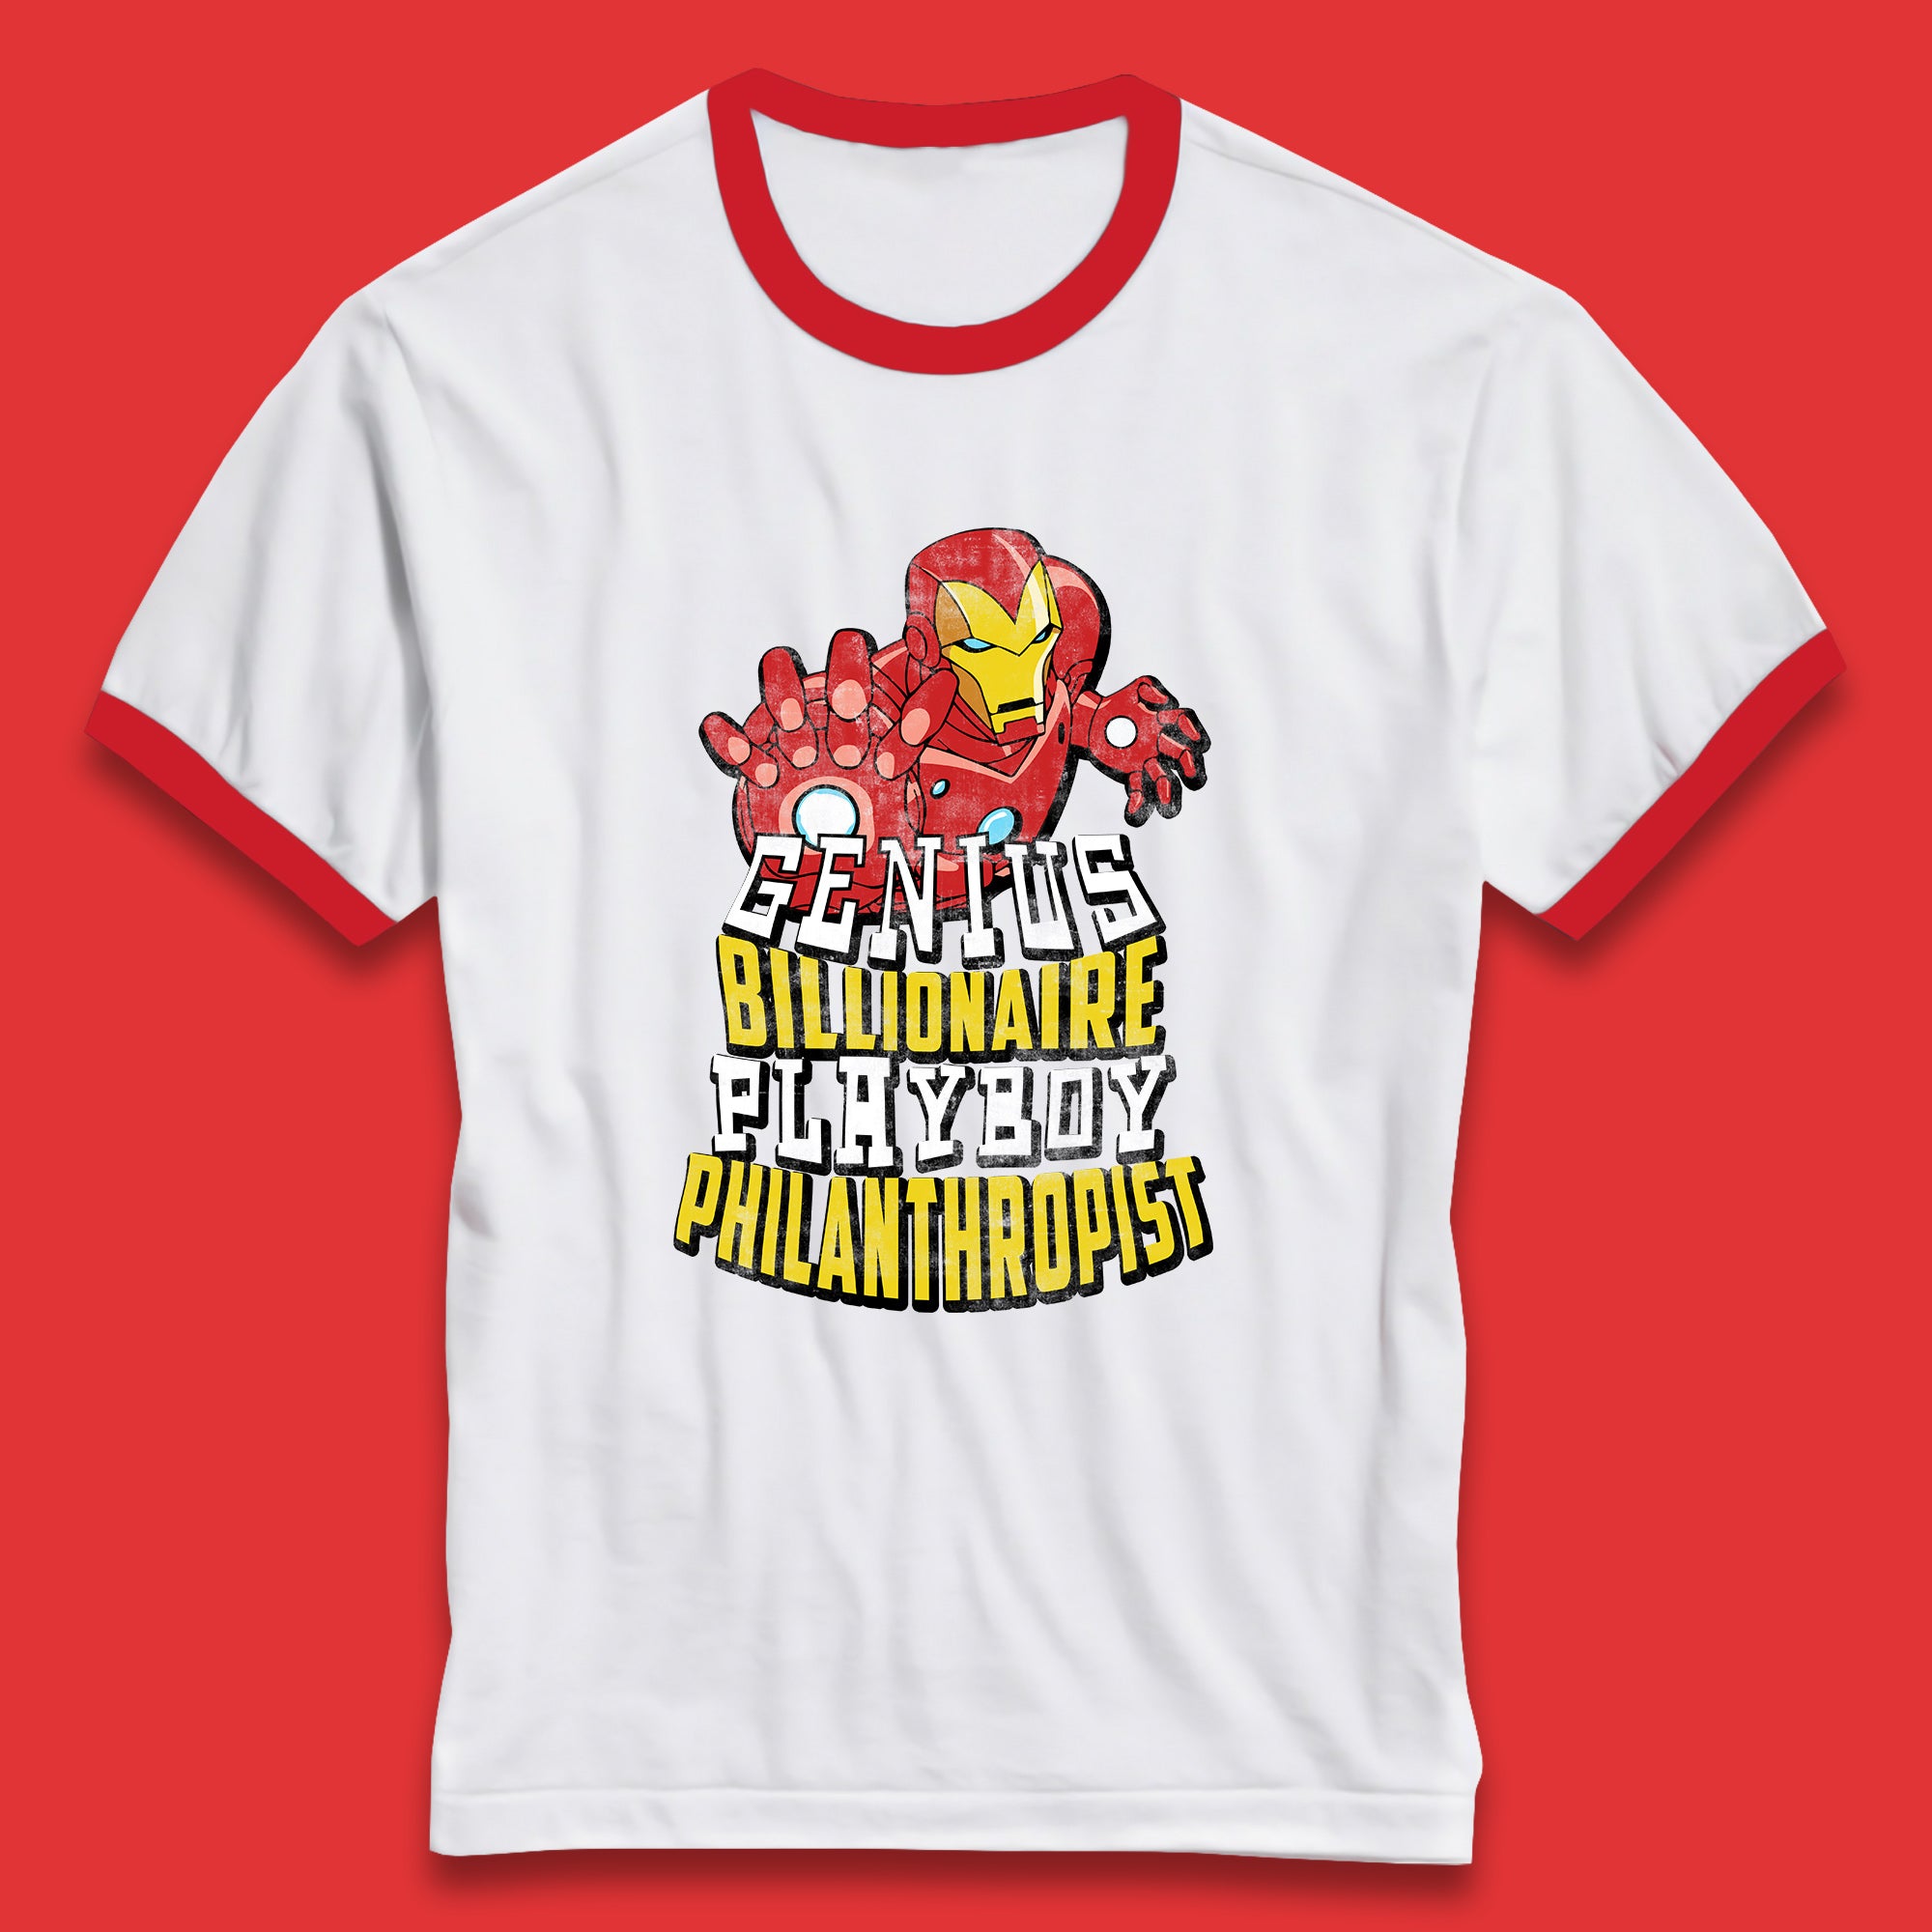 Tony Stark Quote Genius Billionaire Playboy Philanthropist Marvel Avenger Iron Man Superhero Movie Character Ringer T Shirt